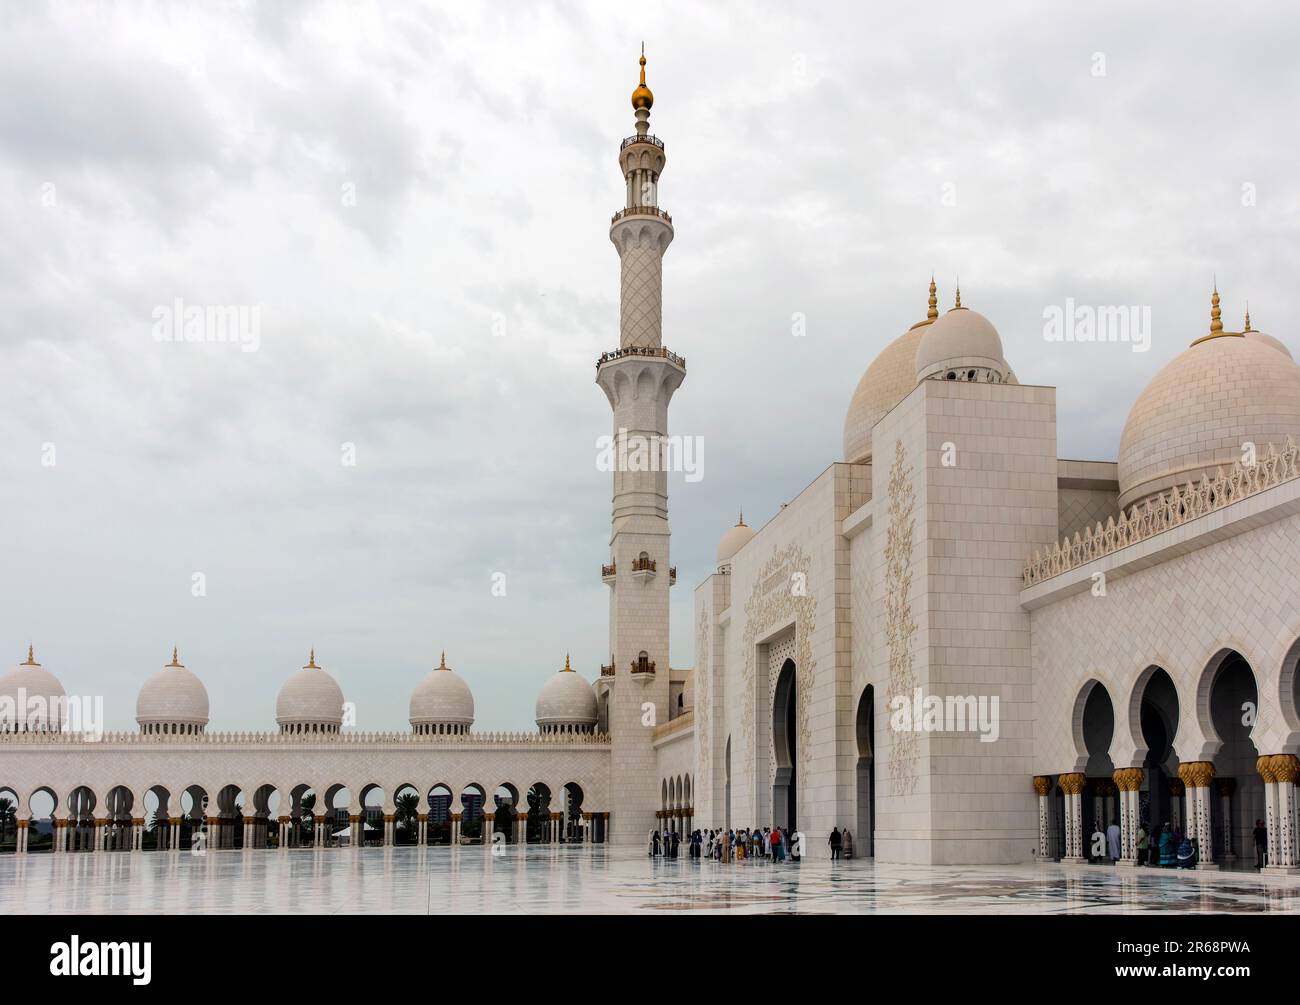 Minaret and domes of the Sheikh Zayed Grand Mosque, Abu Dhabi UAE Stock Photo